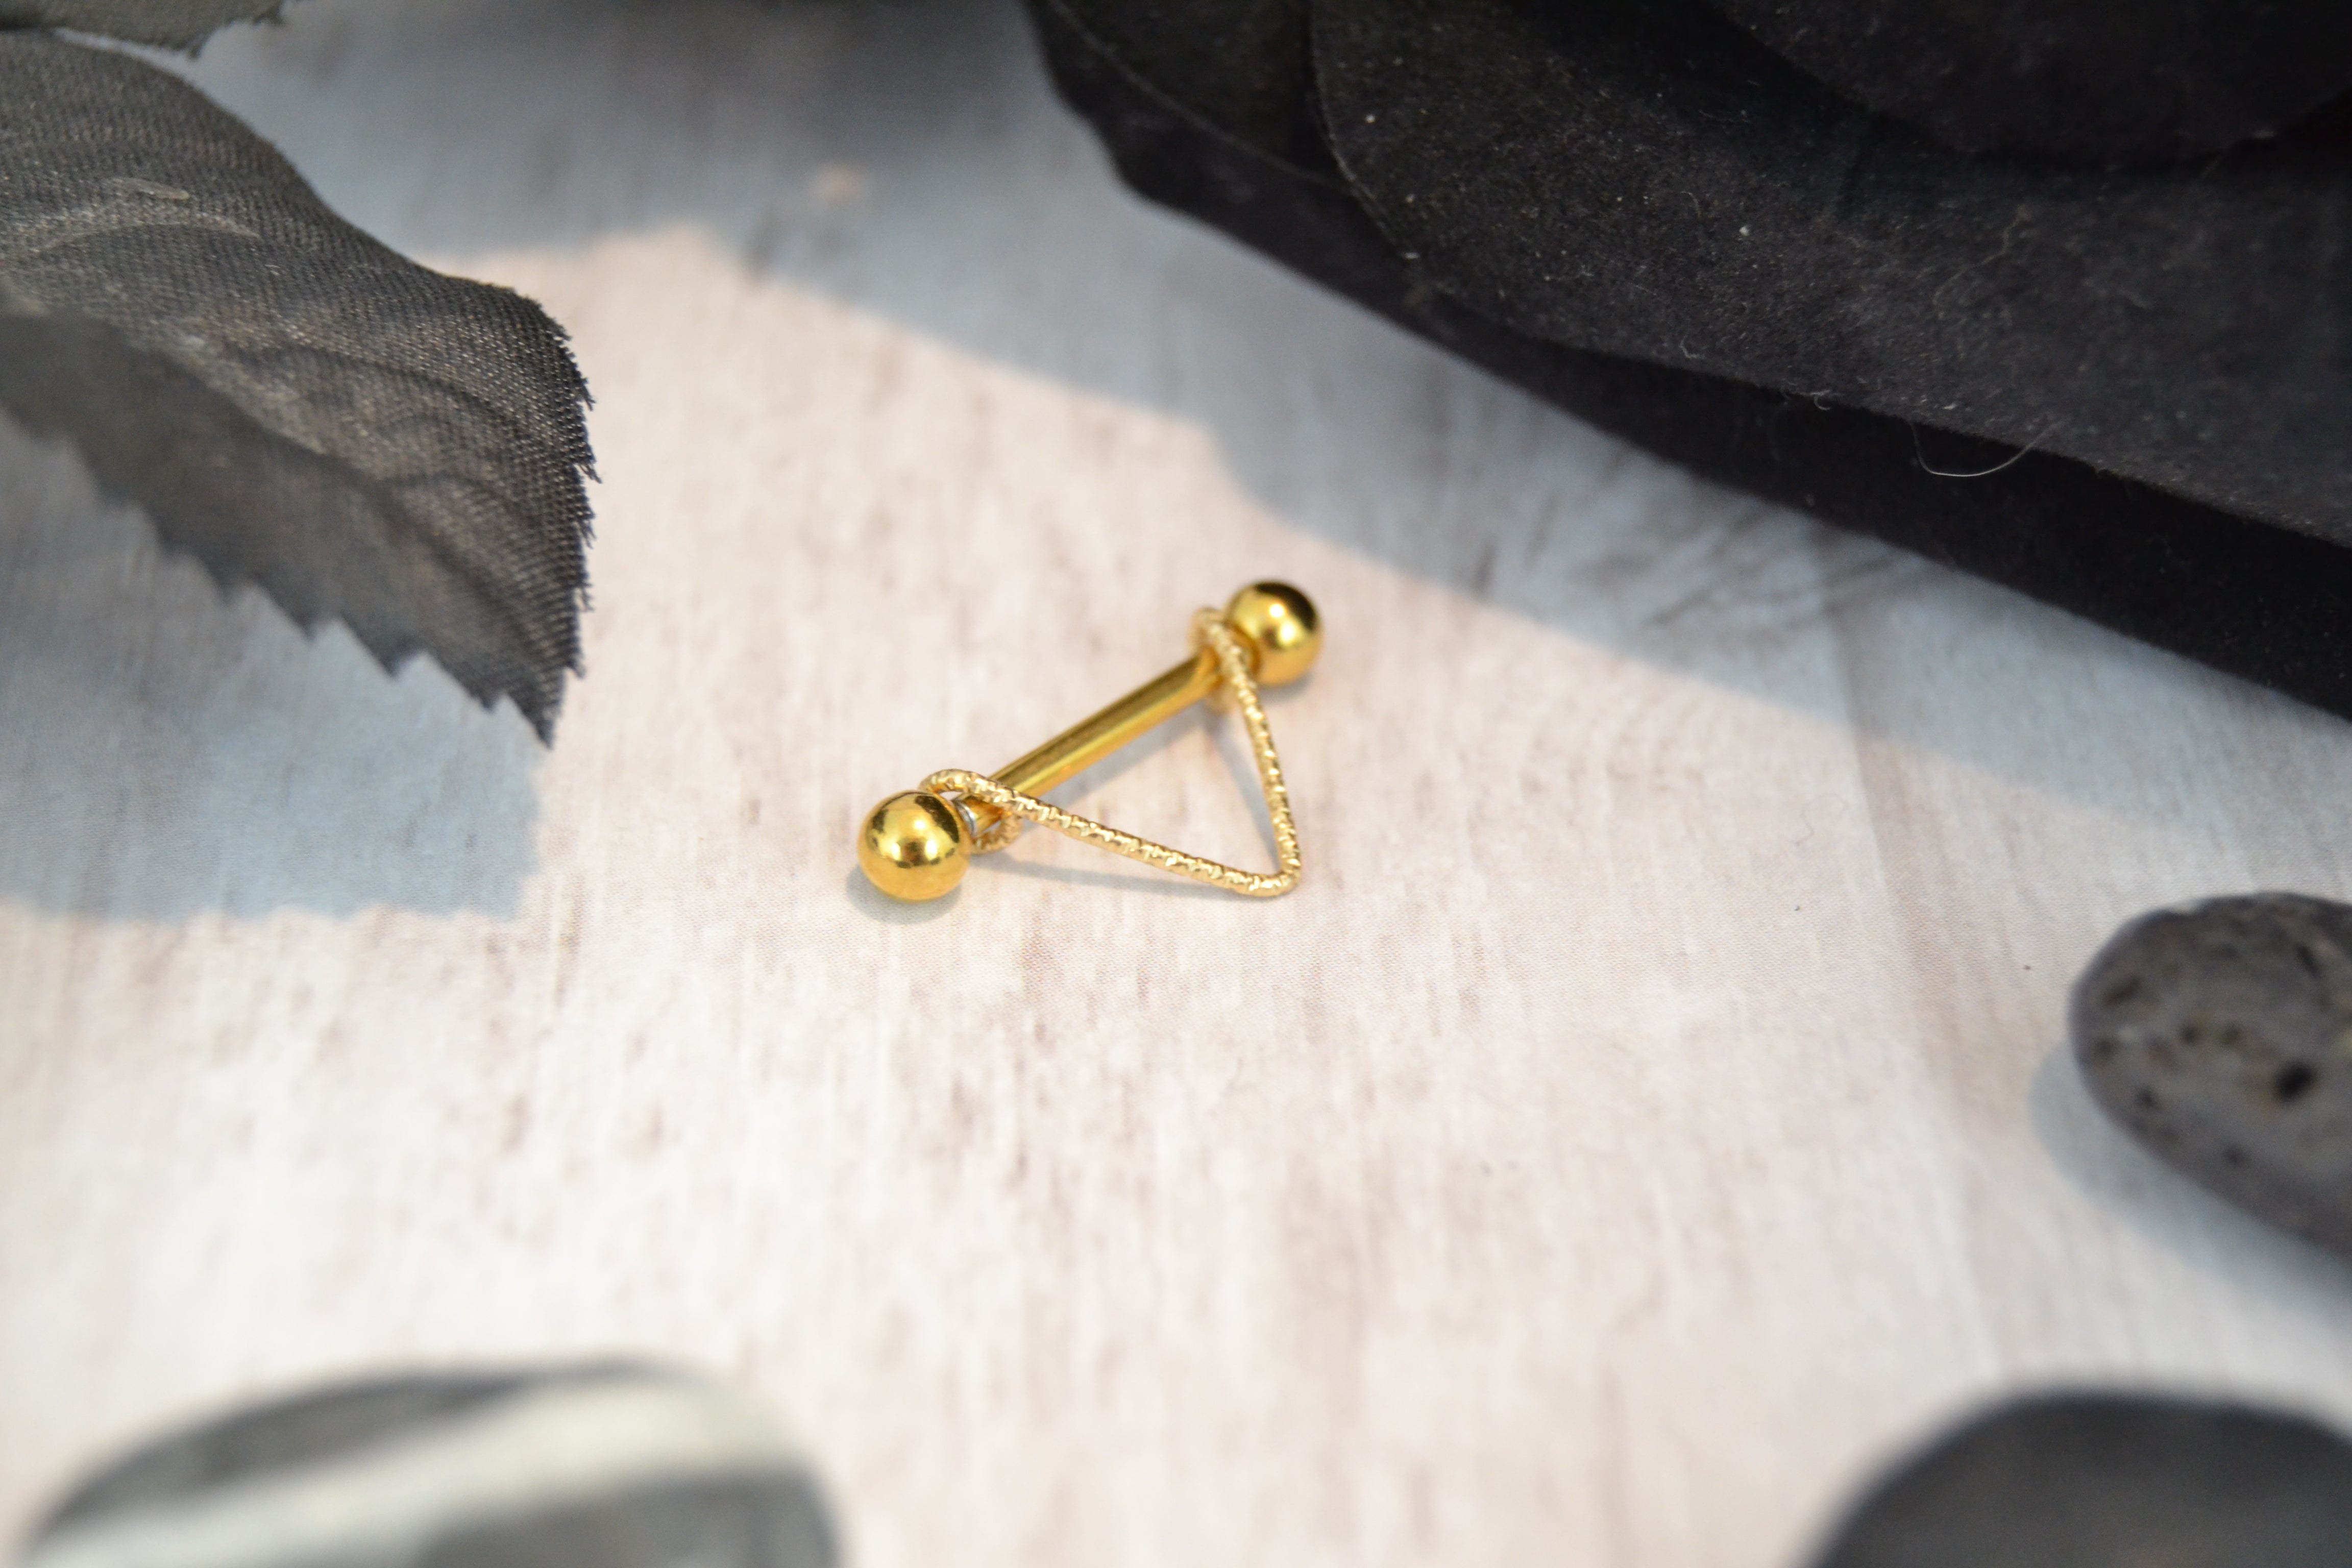 Gold Diamond Wire V Shaped Nipple Shield - 1 pc